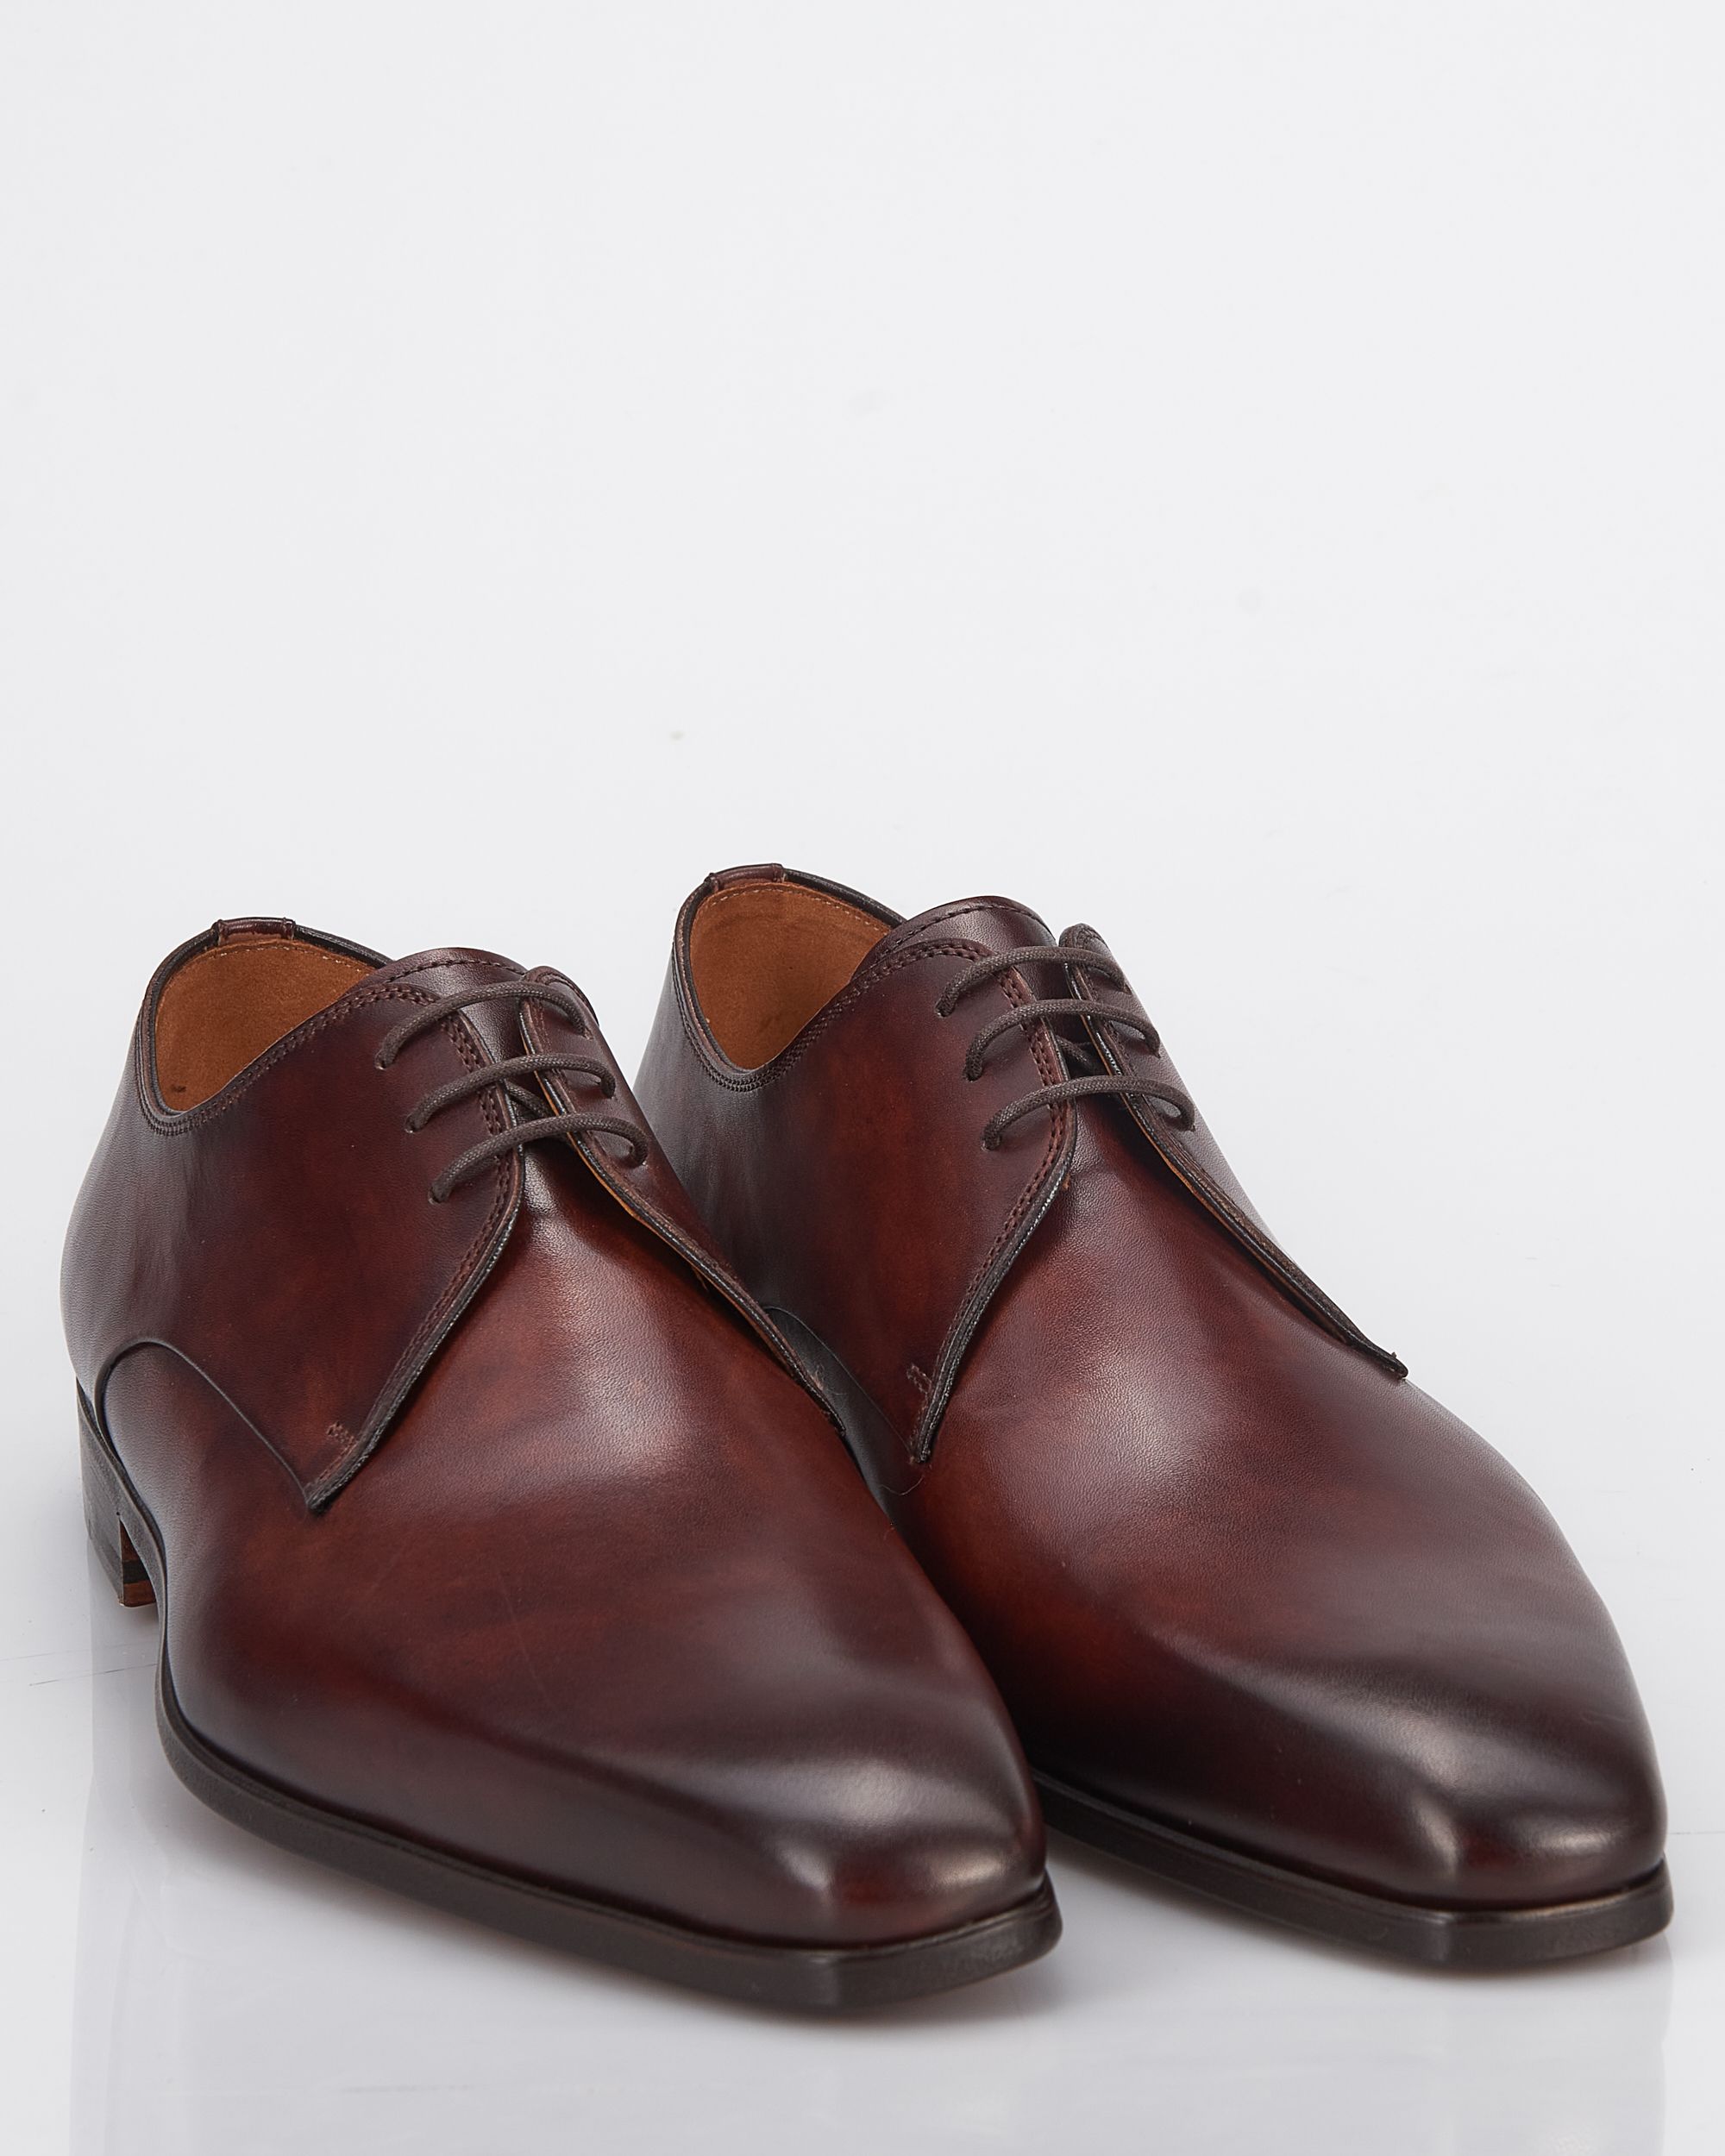 Magnanni Geklede schoenen Donker bruin 084907-001-41